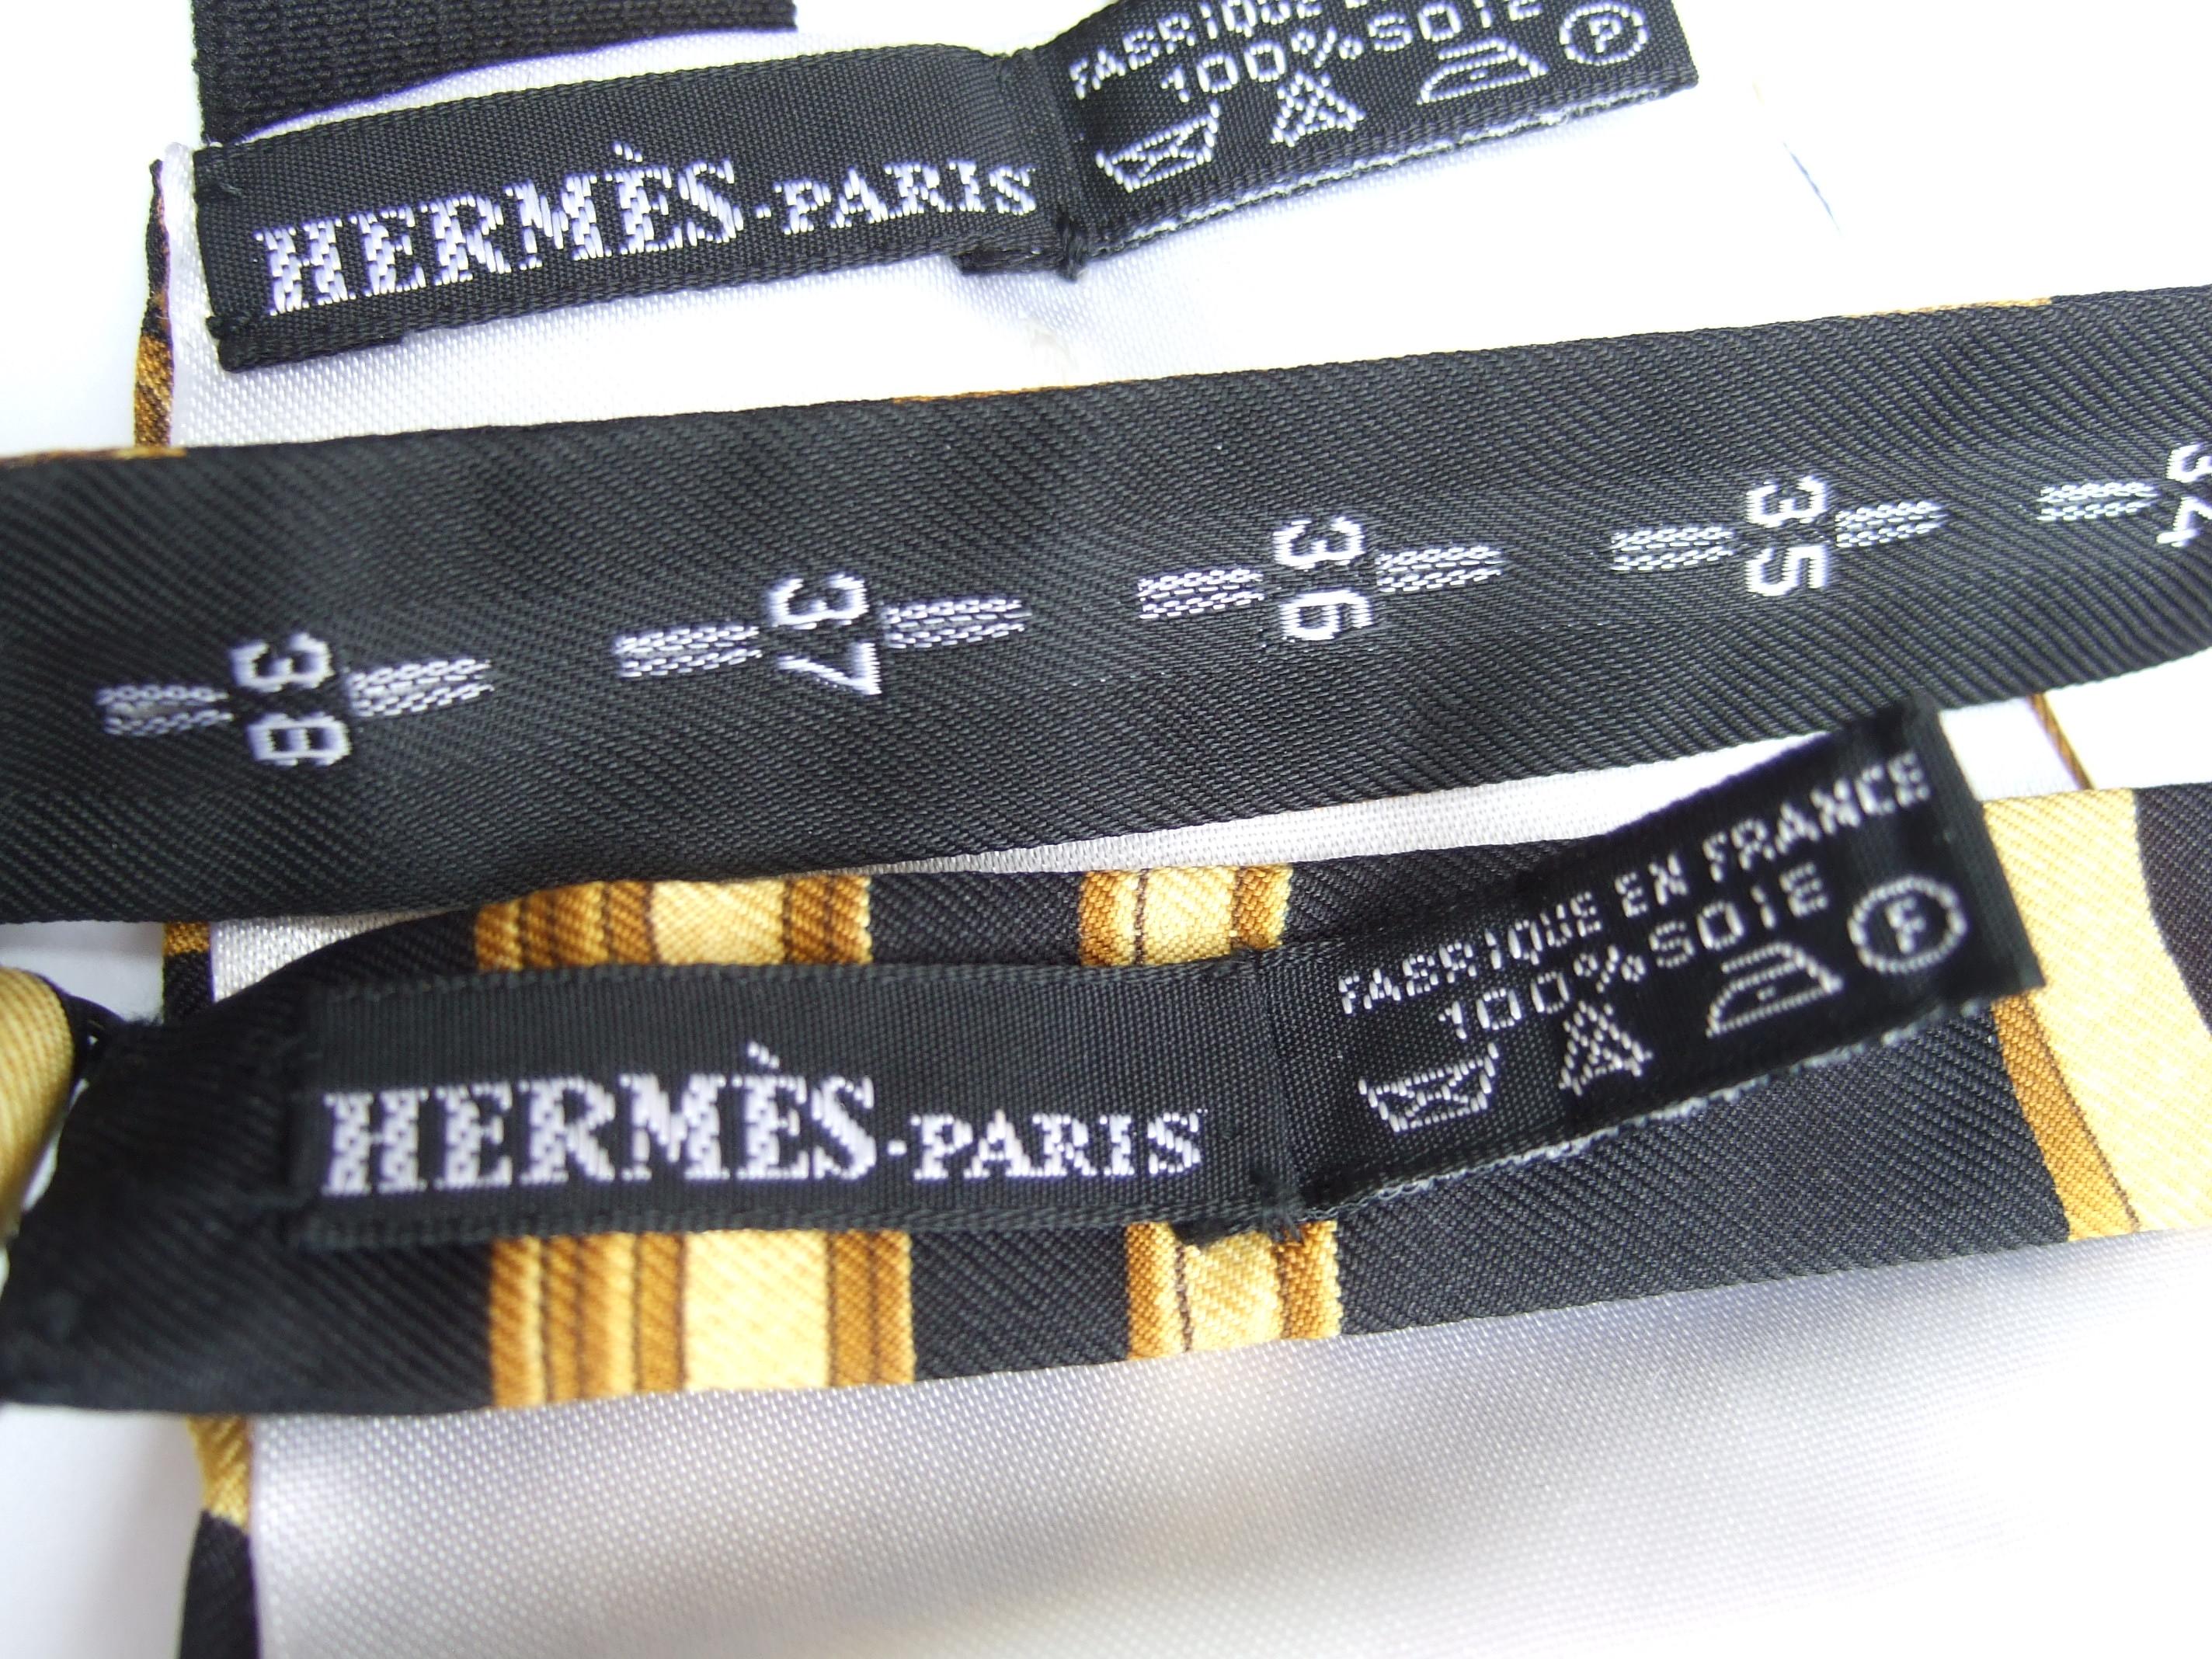 Hermes Paris Men's Silk Cummerbund & Bow Tie in Hermes Box c 1990s 6